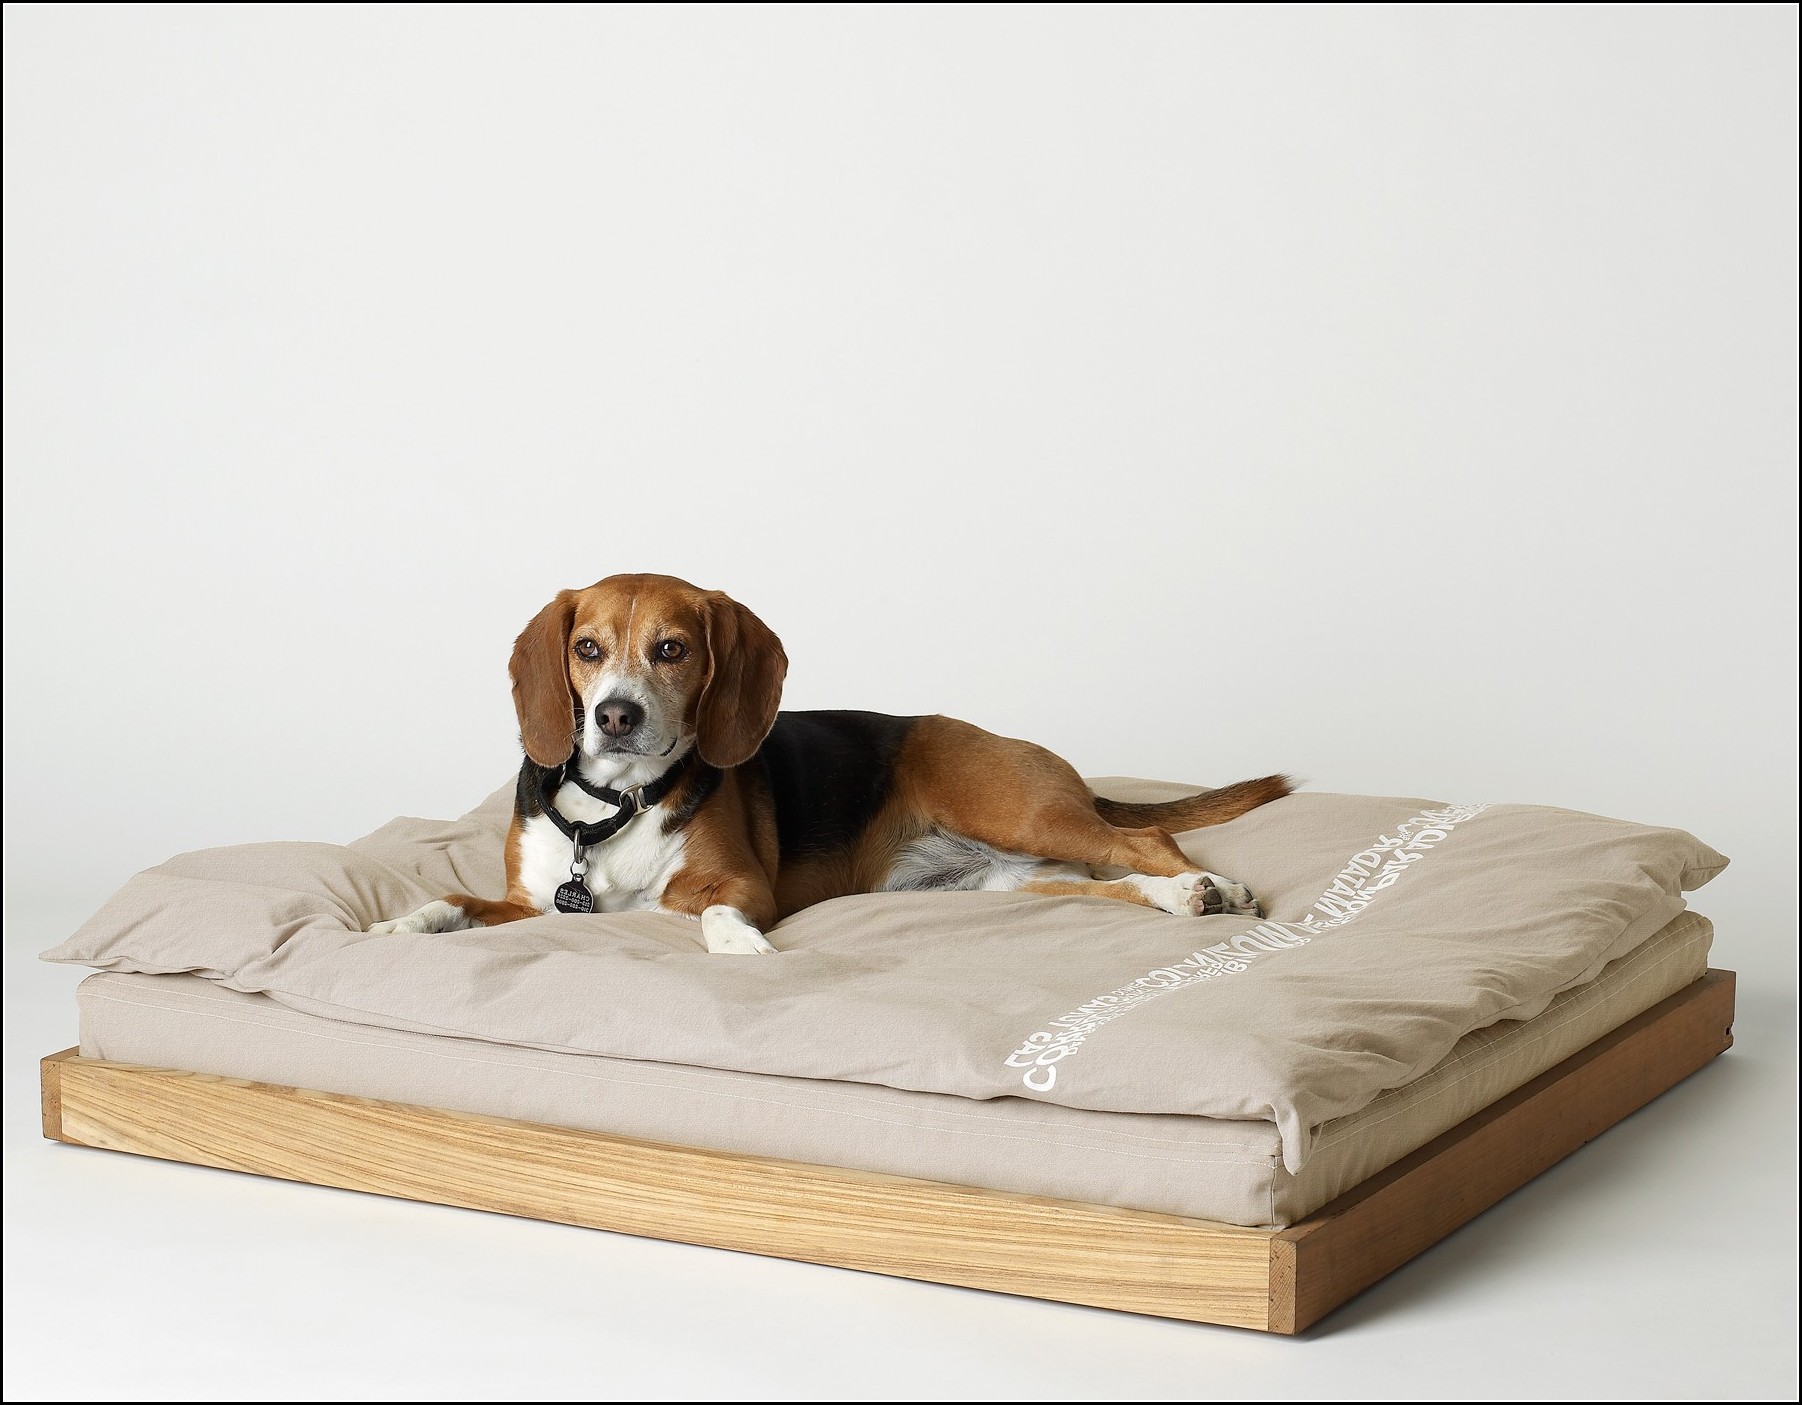 Dog Beds Australia